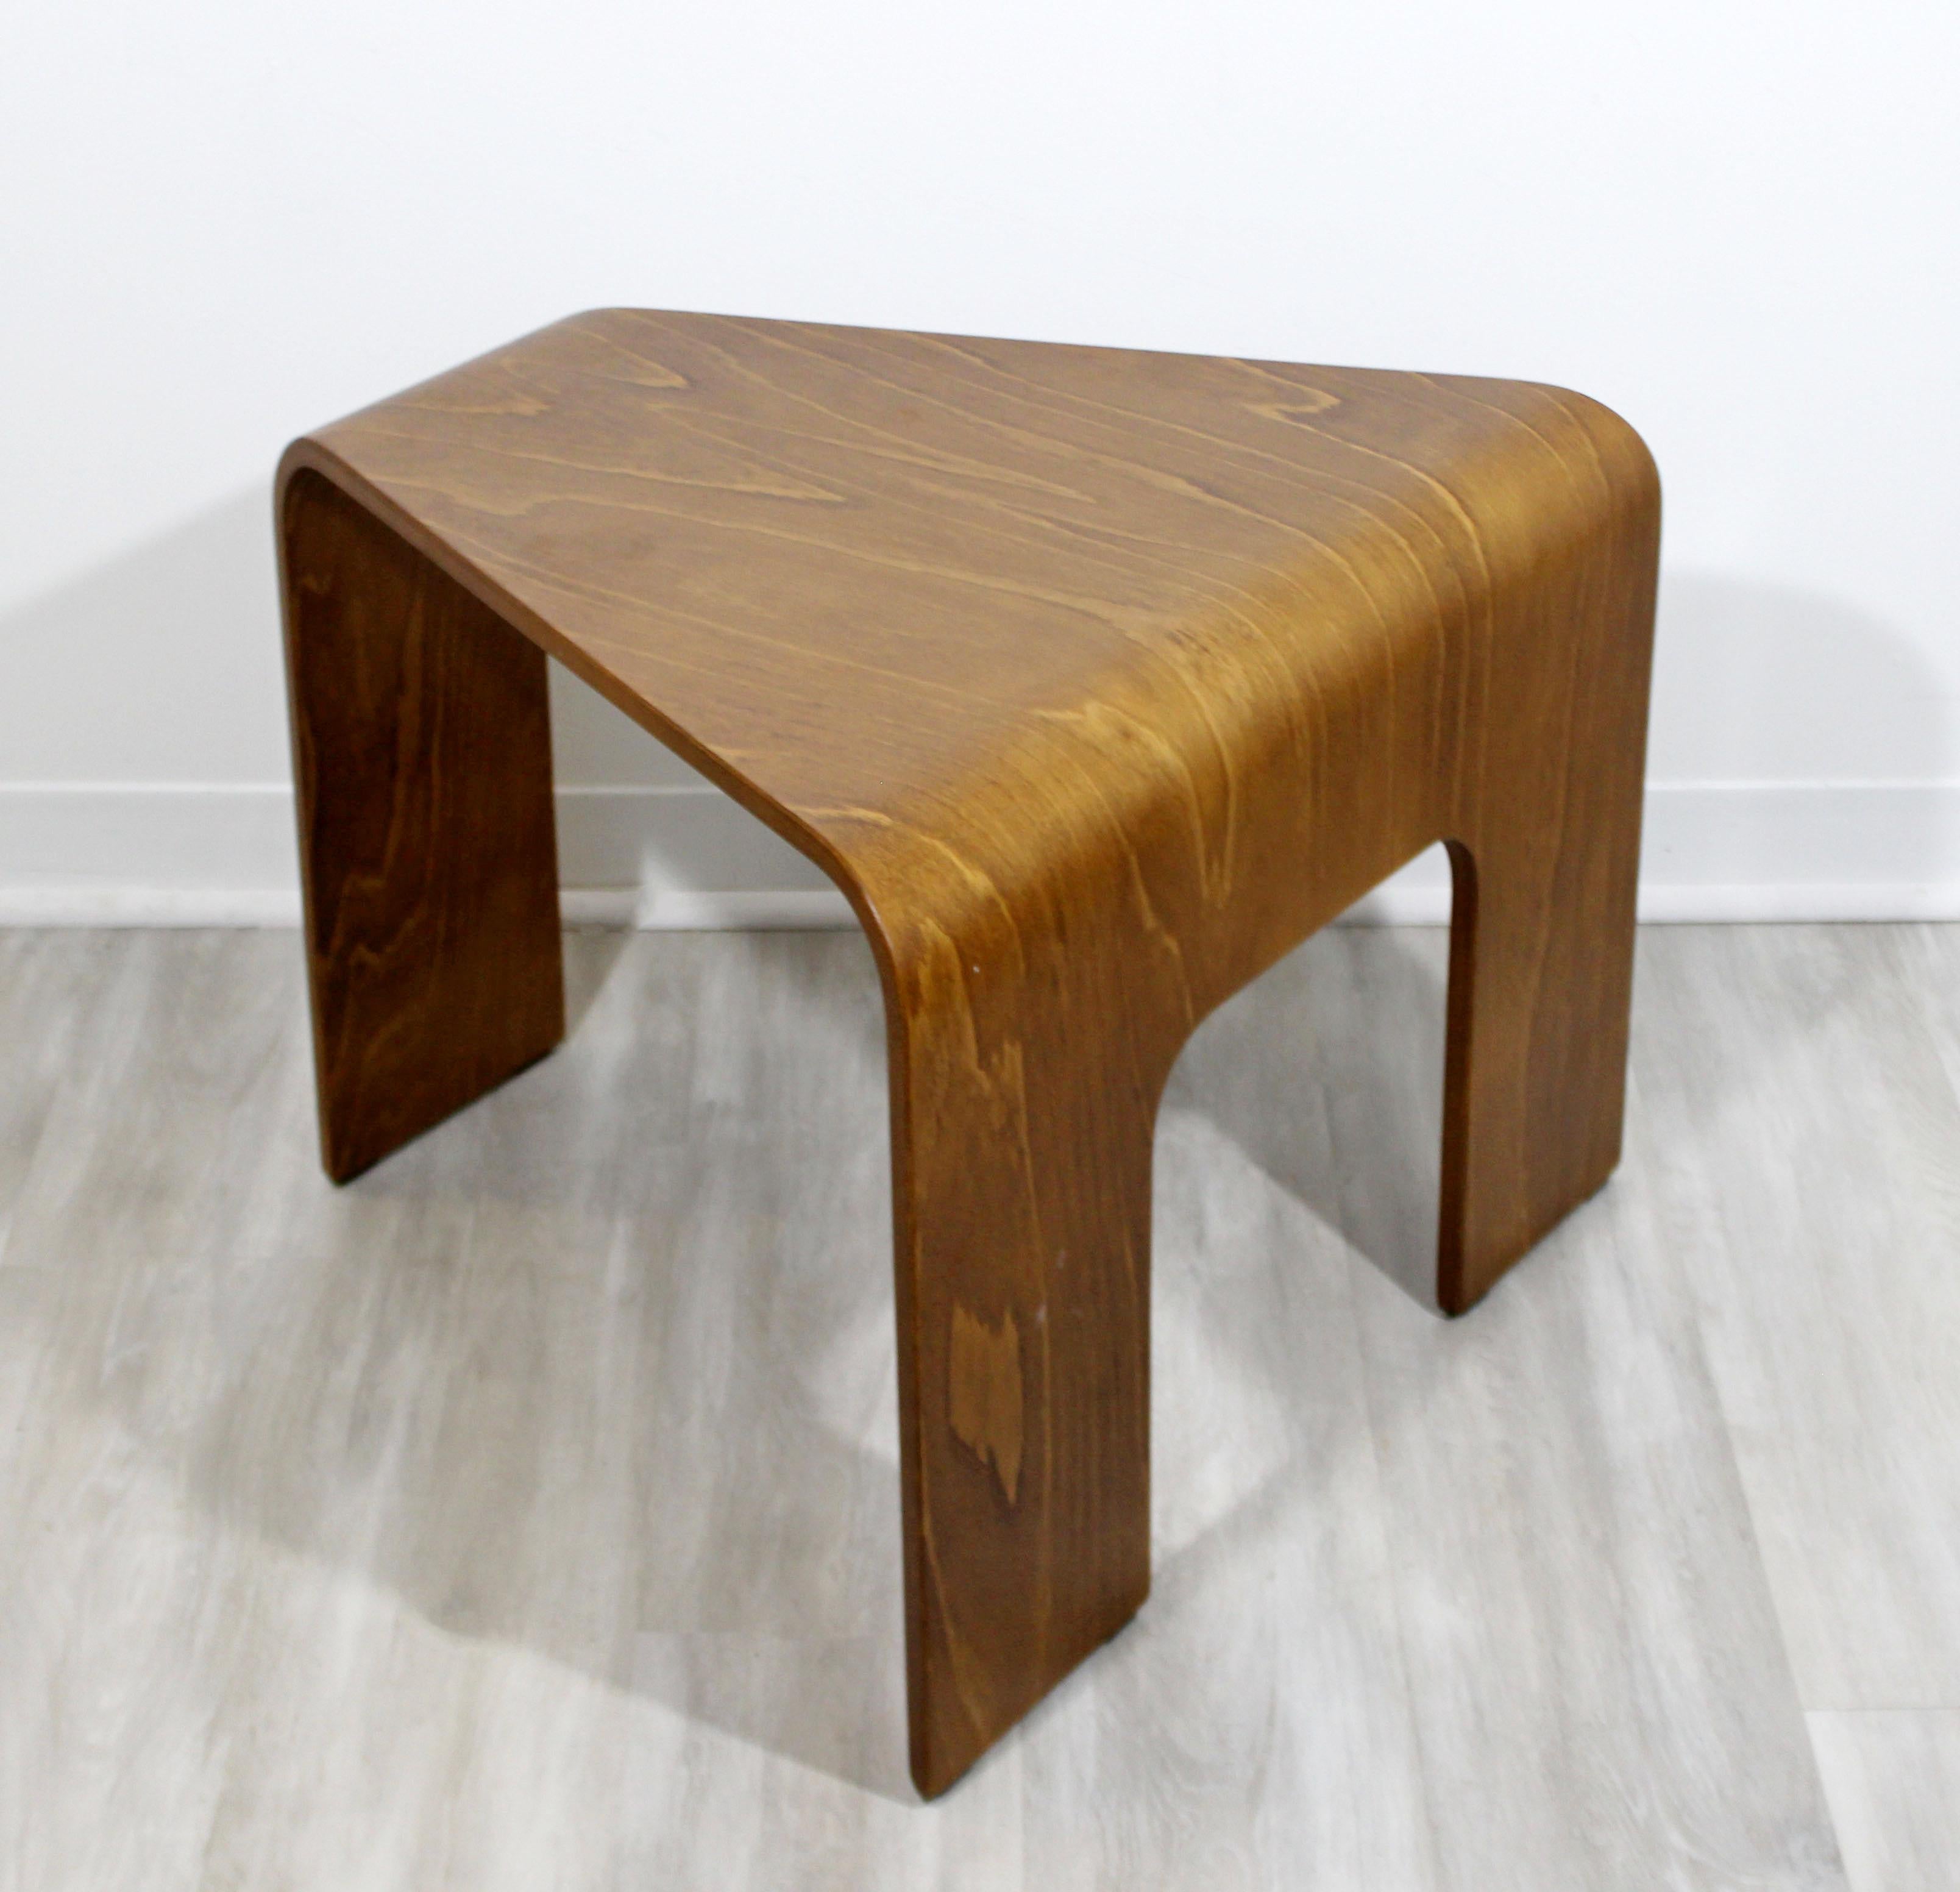 Mid-20th Century Mid-Century Modern Danish Bentwood Corner Side End Table 1960s Dansk Style